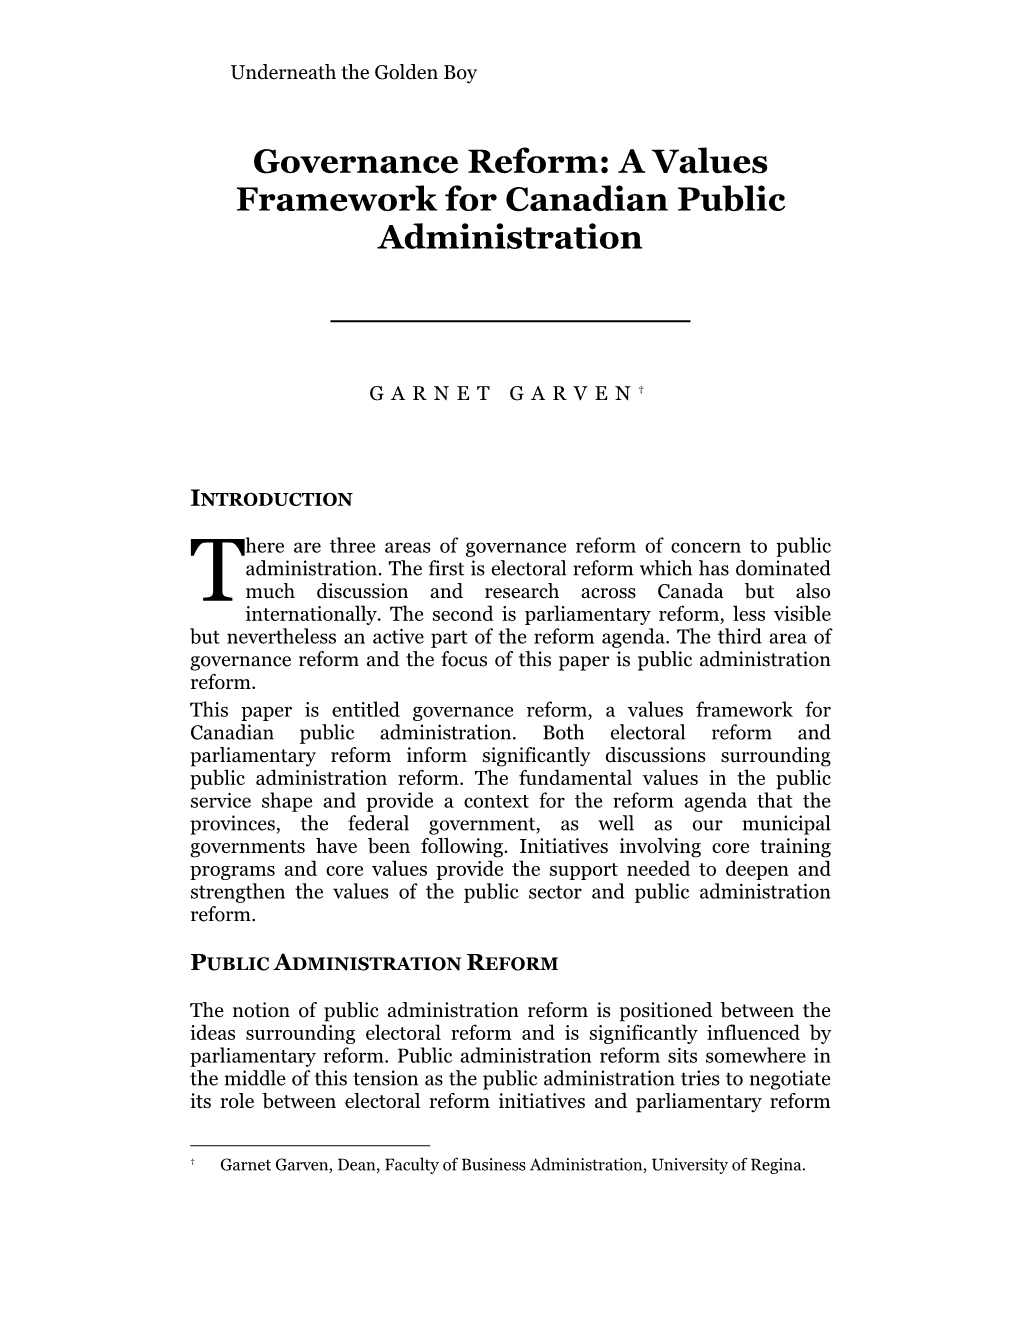 Governance Reform: a Values Framework for Canadian Public Administration